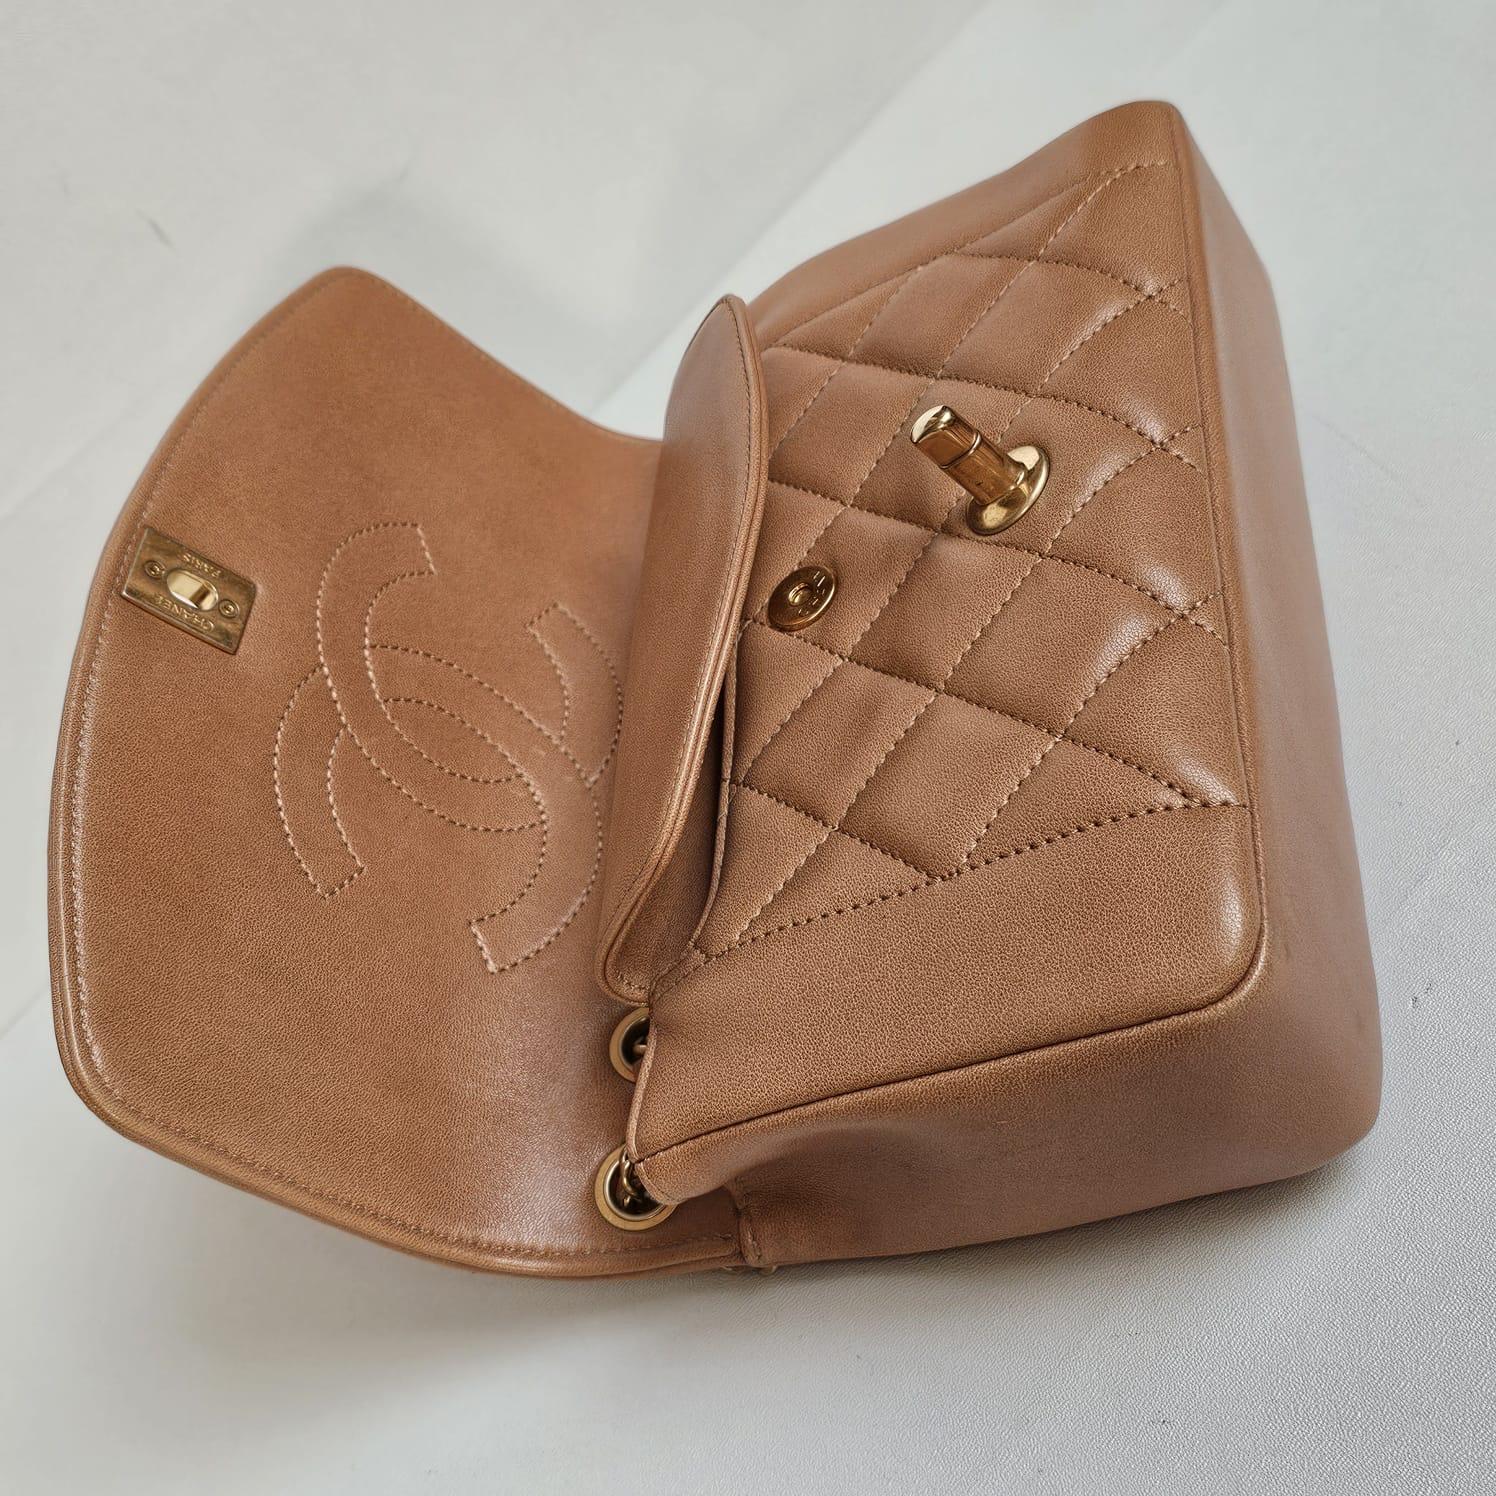 2014-2015 Chanel Caramel Diana Flap Bag For Sale 7